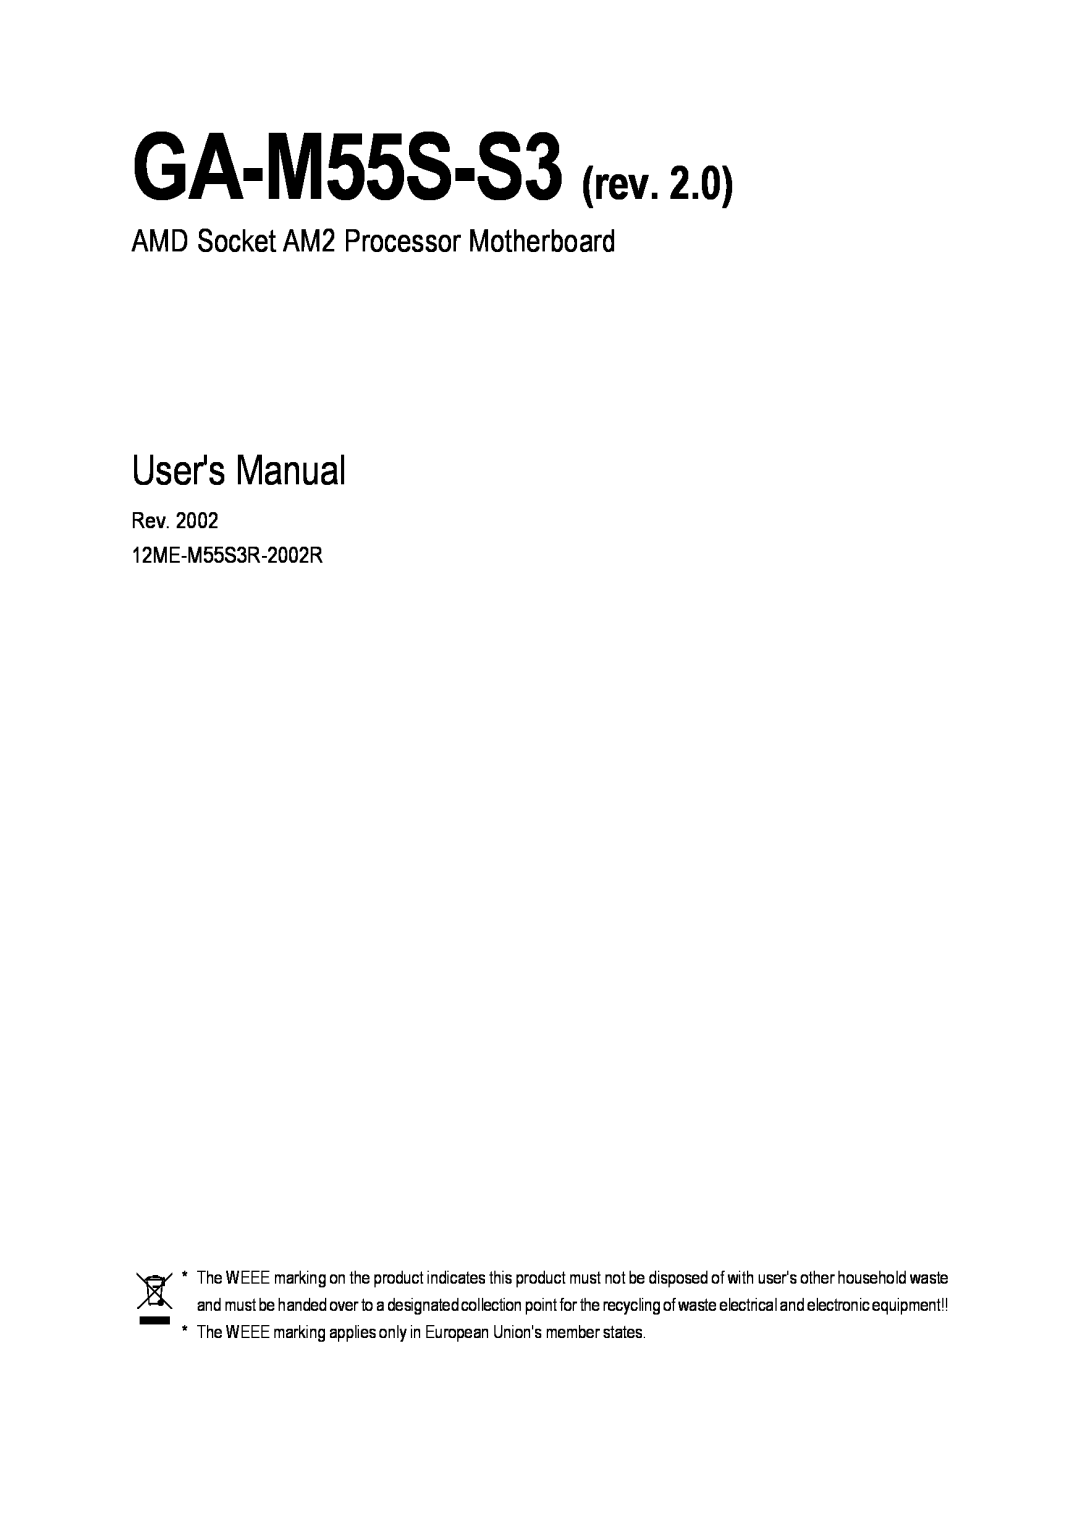 Gigabyte user manual GA-M55S-S3 rev, Users Manual, AMD Socket AM2 Processor Motherboard 